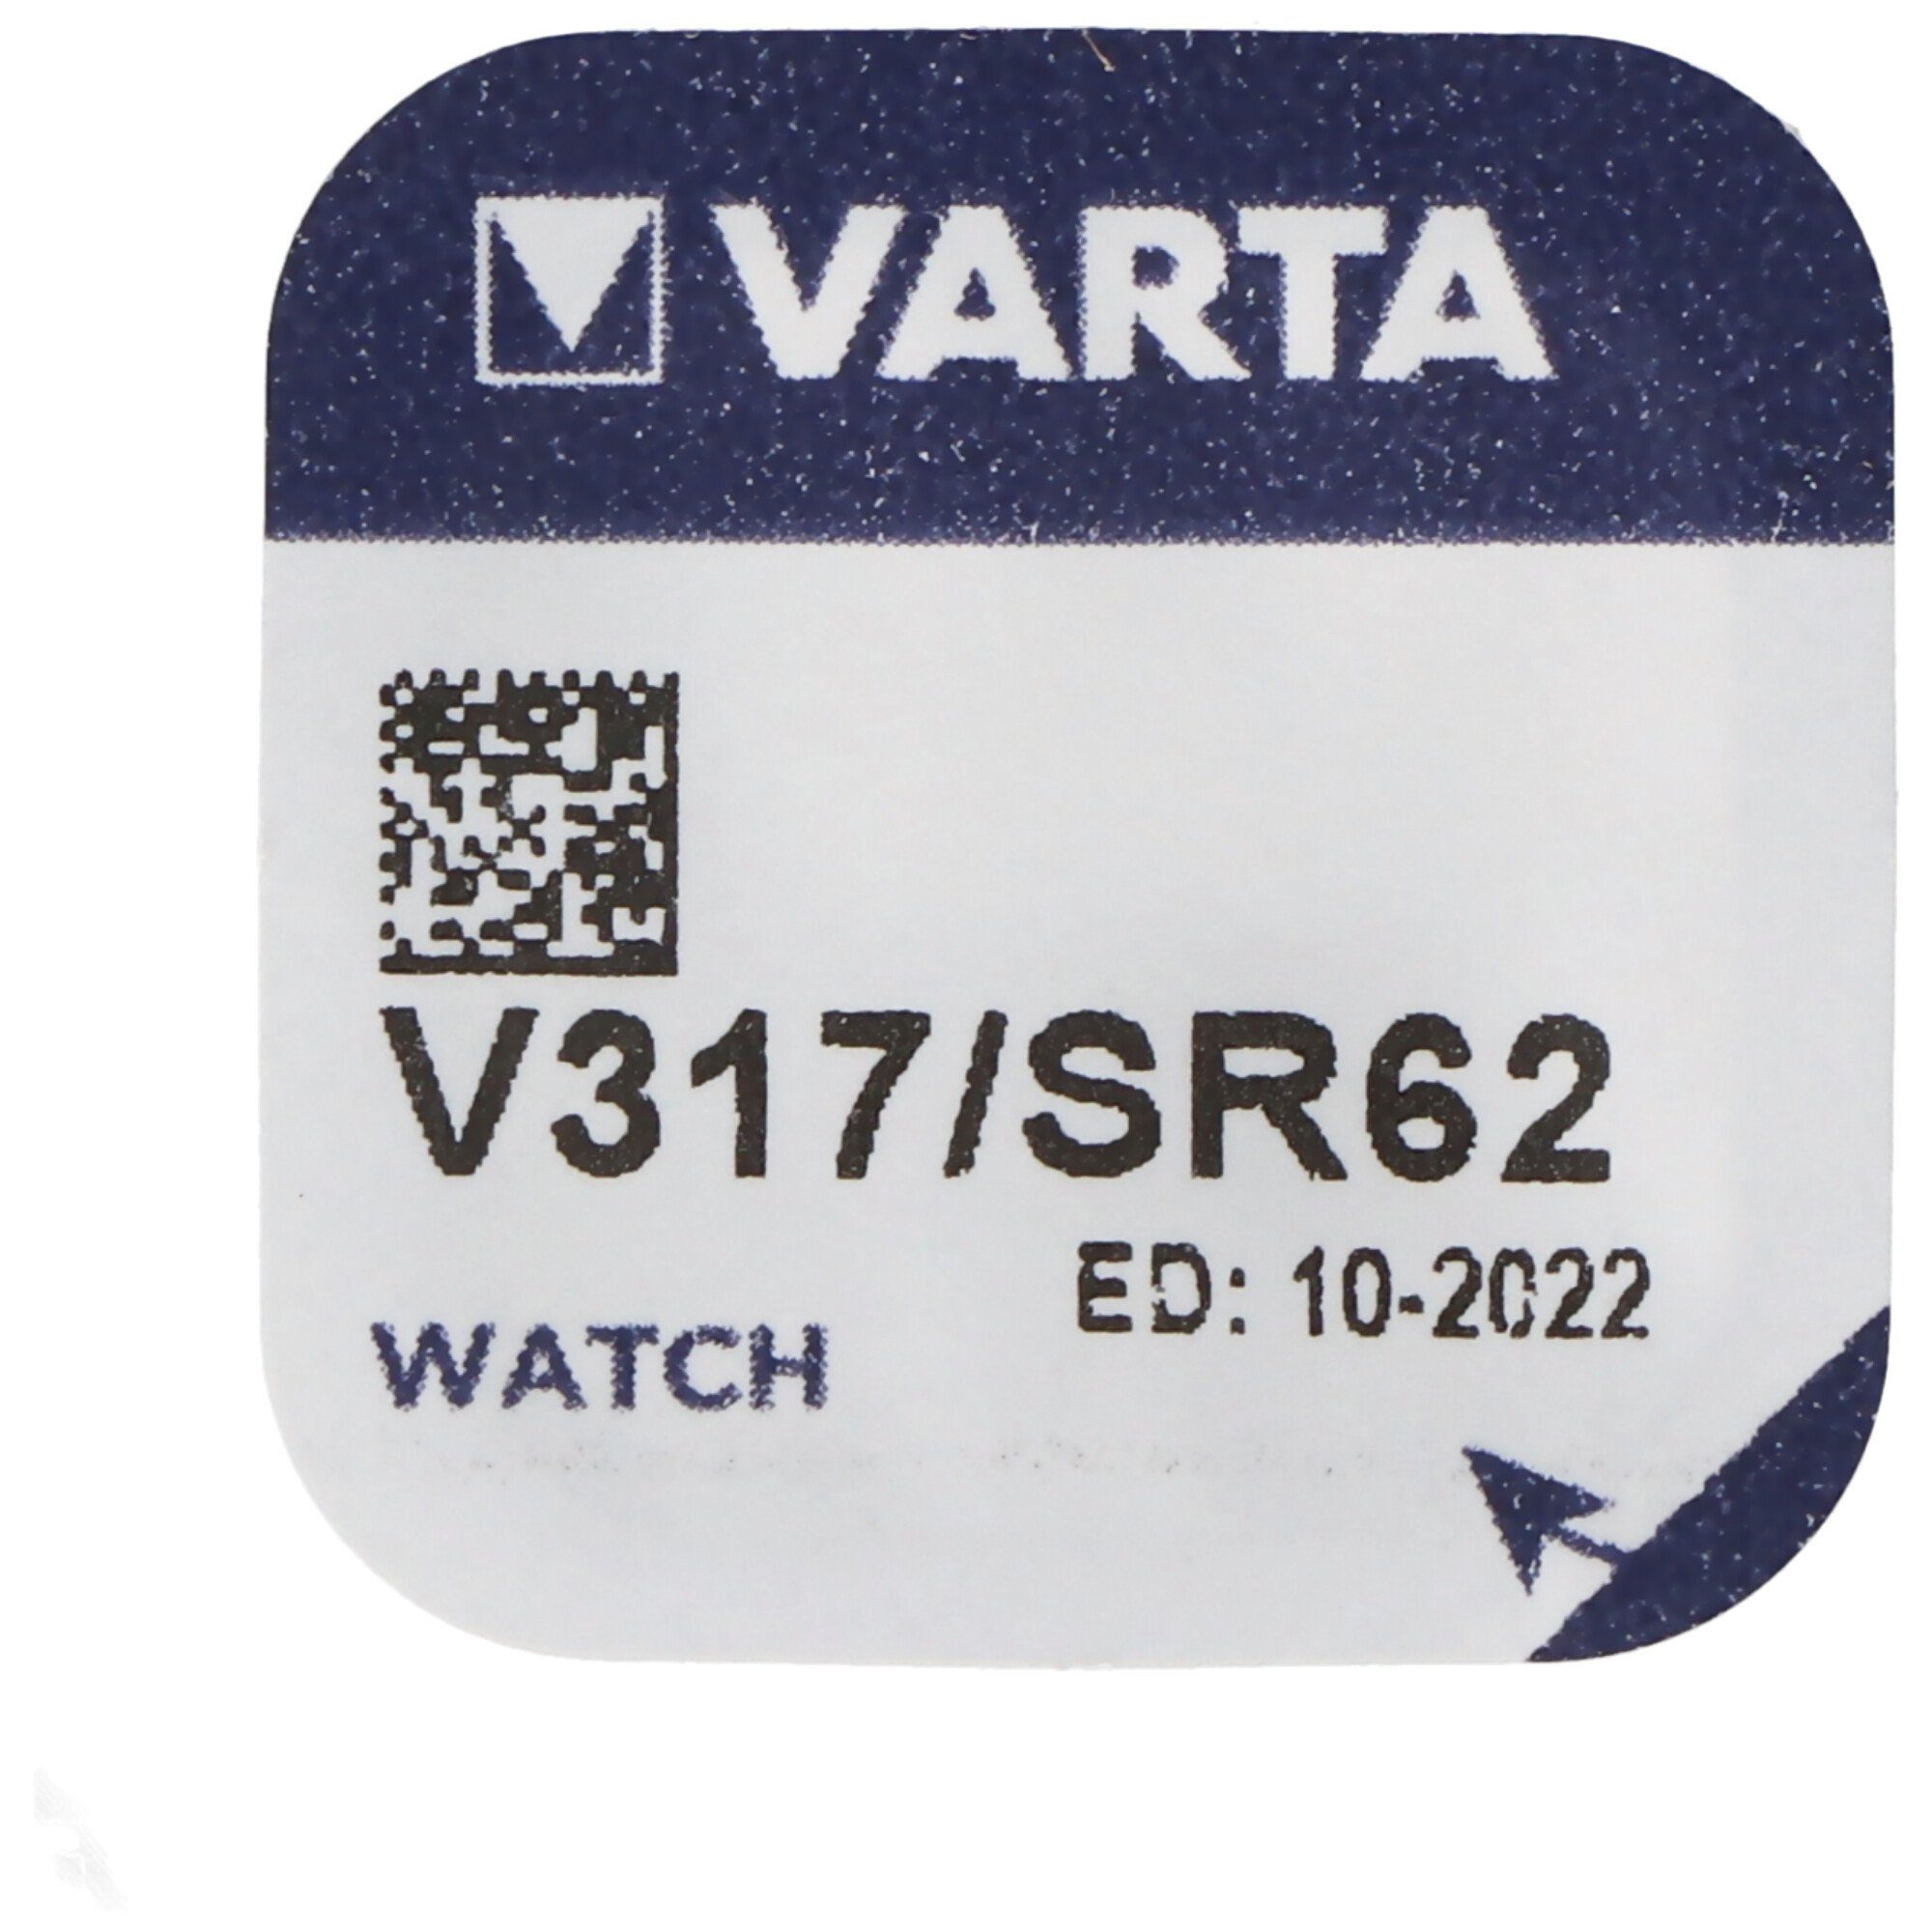 Varta V317, Knopfzelle VARTA (1,6 etc. für SR62, 317, V) SR516SW Uhren Knopfzelle,